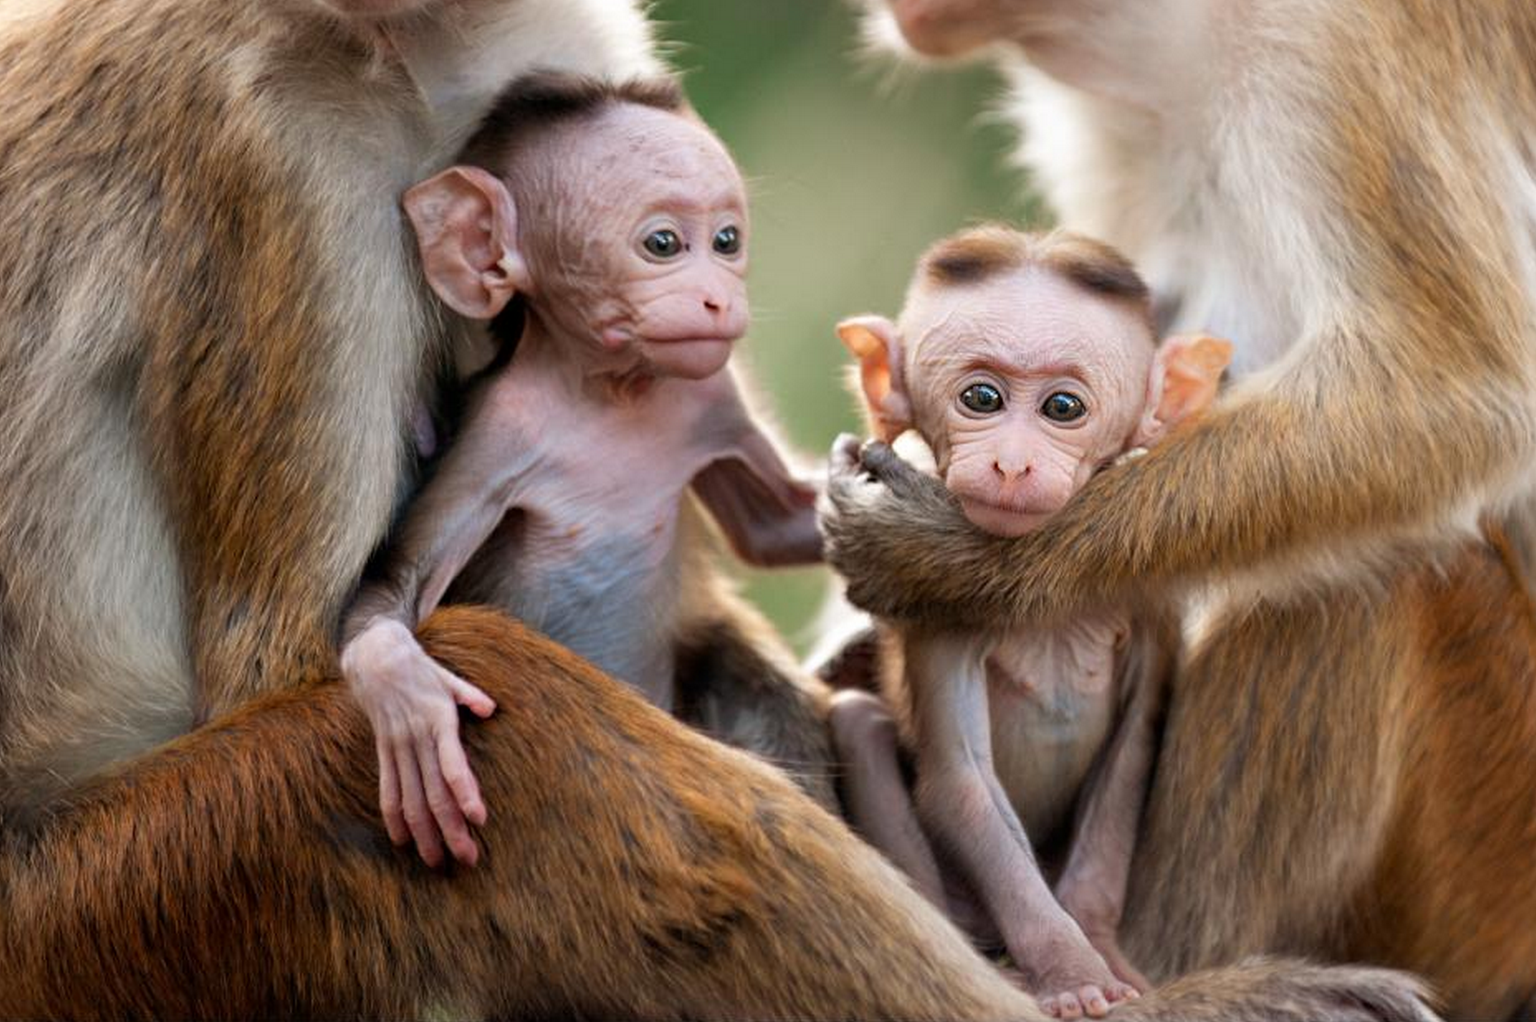 Monkey-Kingdom-baby-monkey-survival-socialization